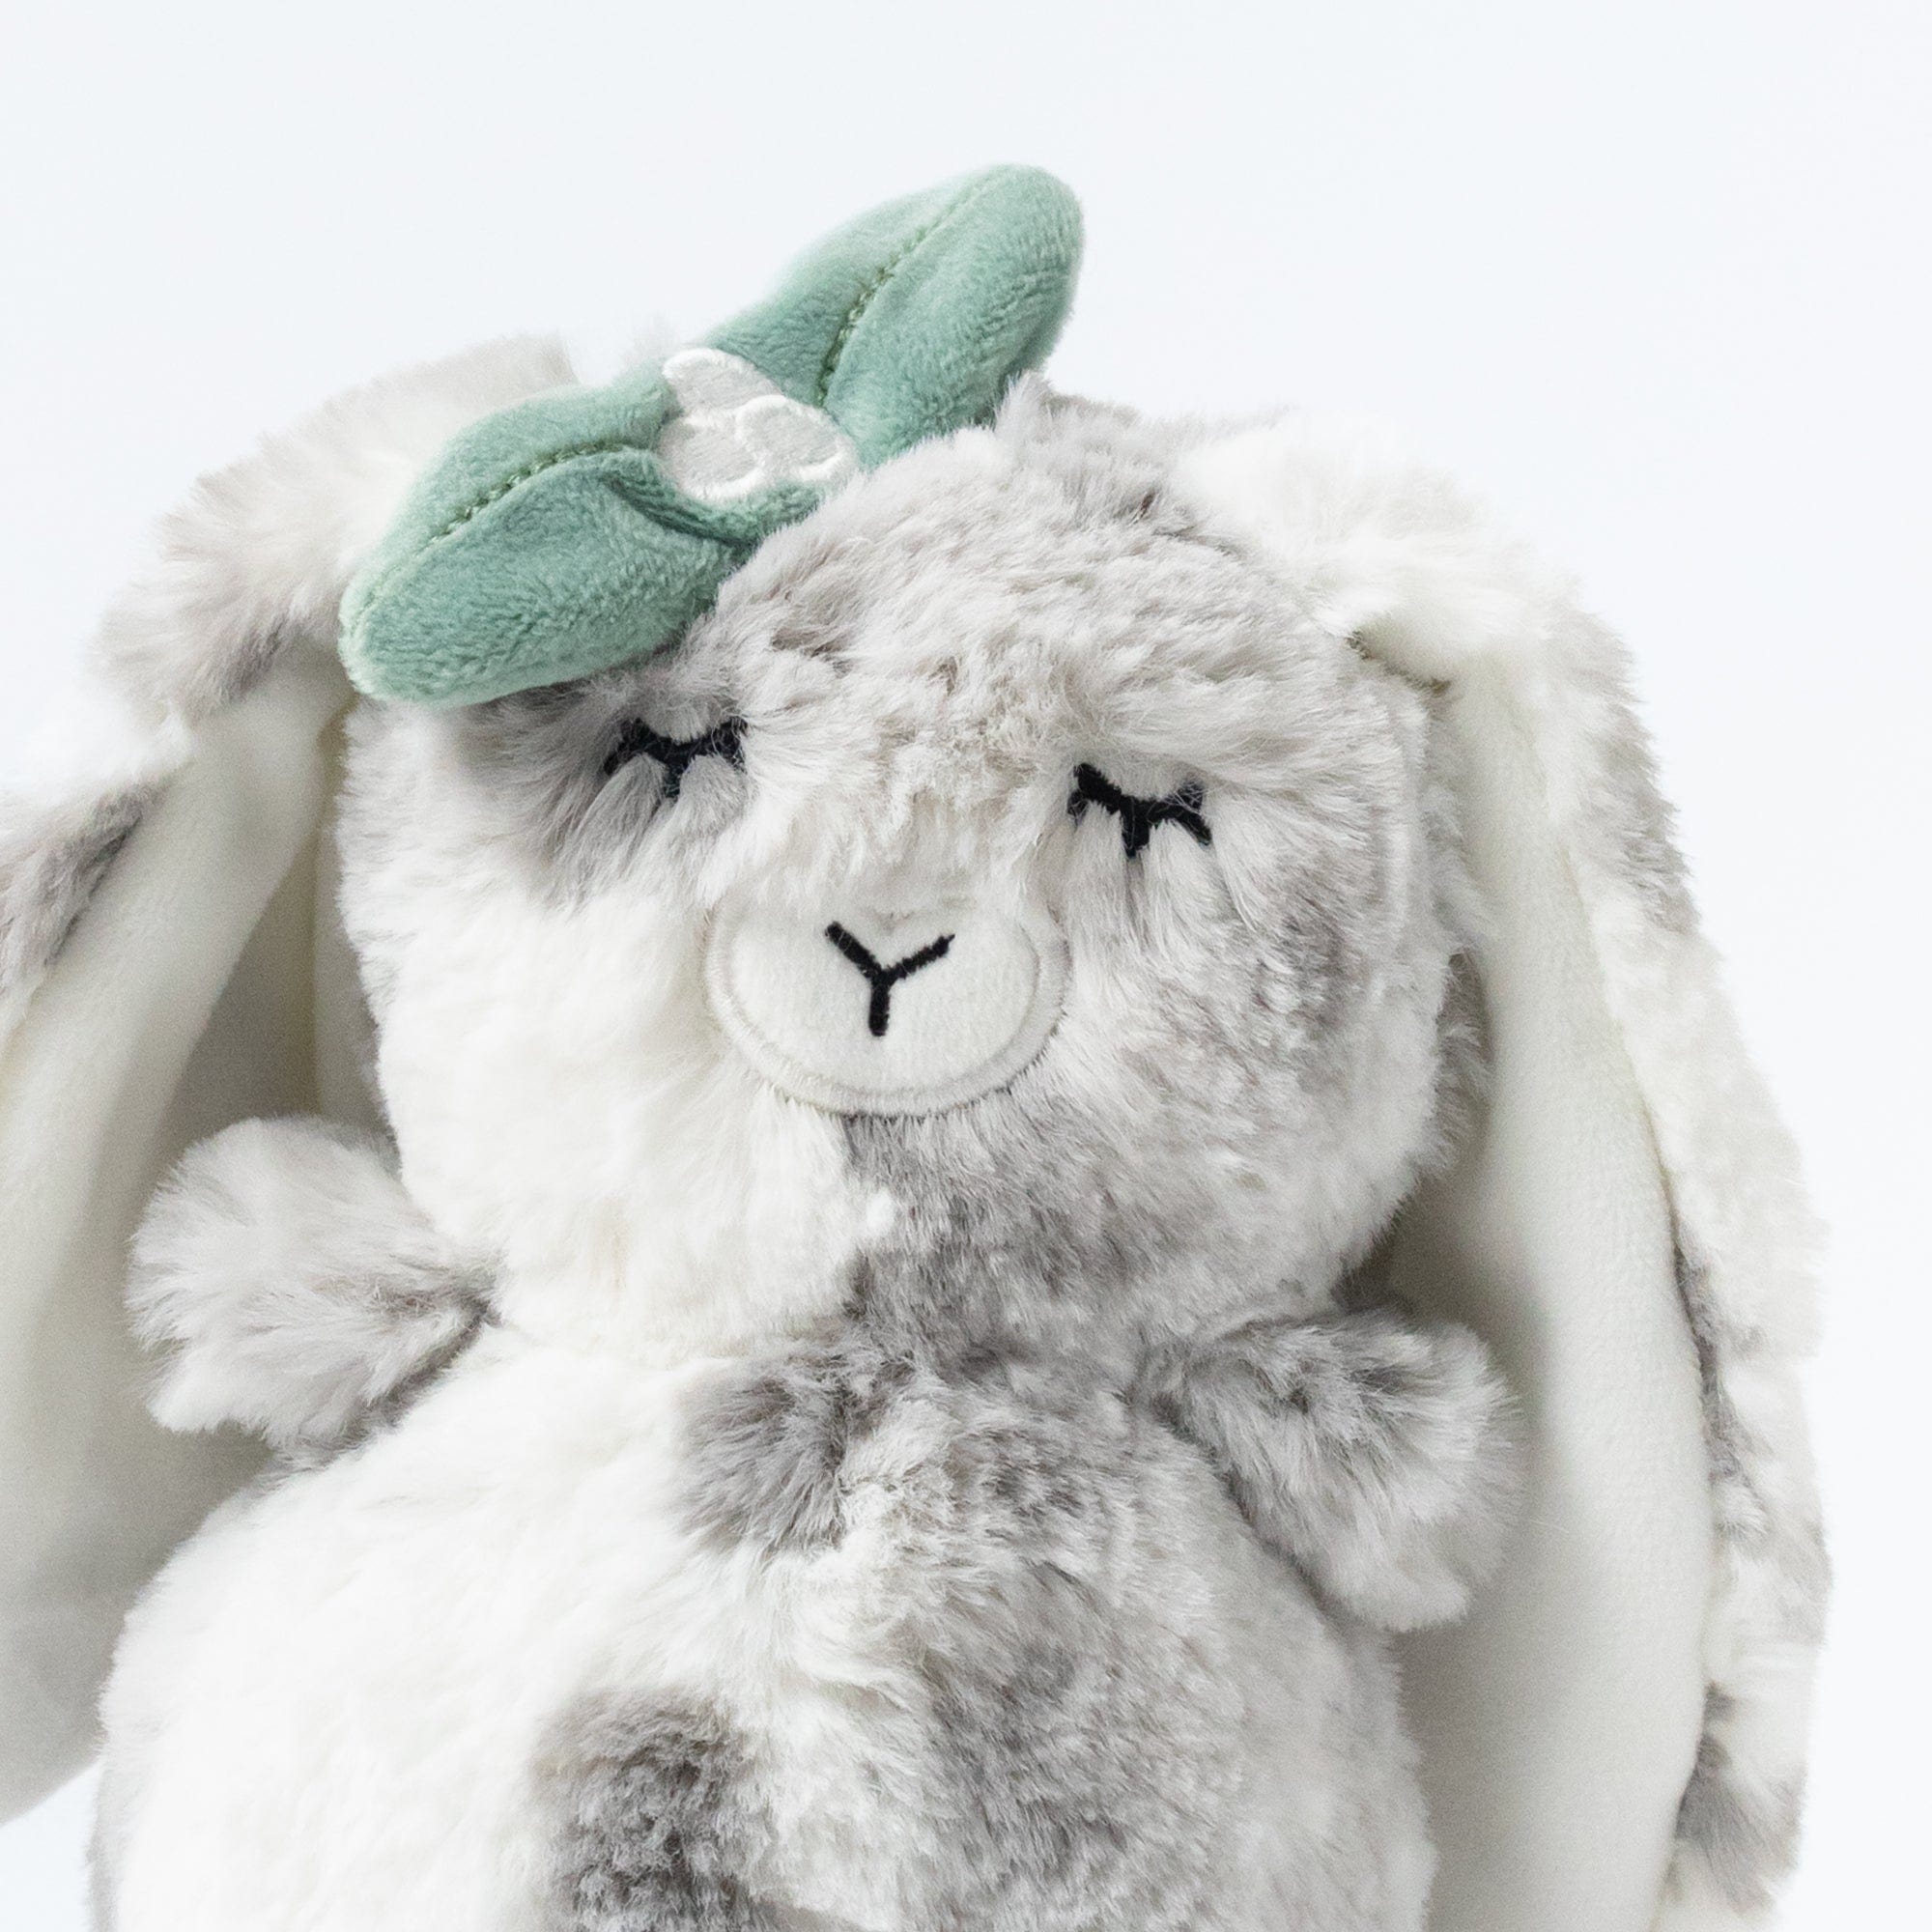 Snow Bunny Mini - View Product